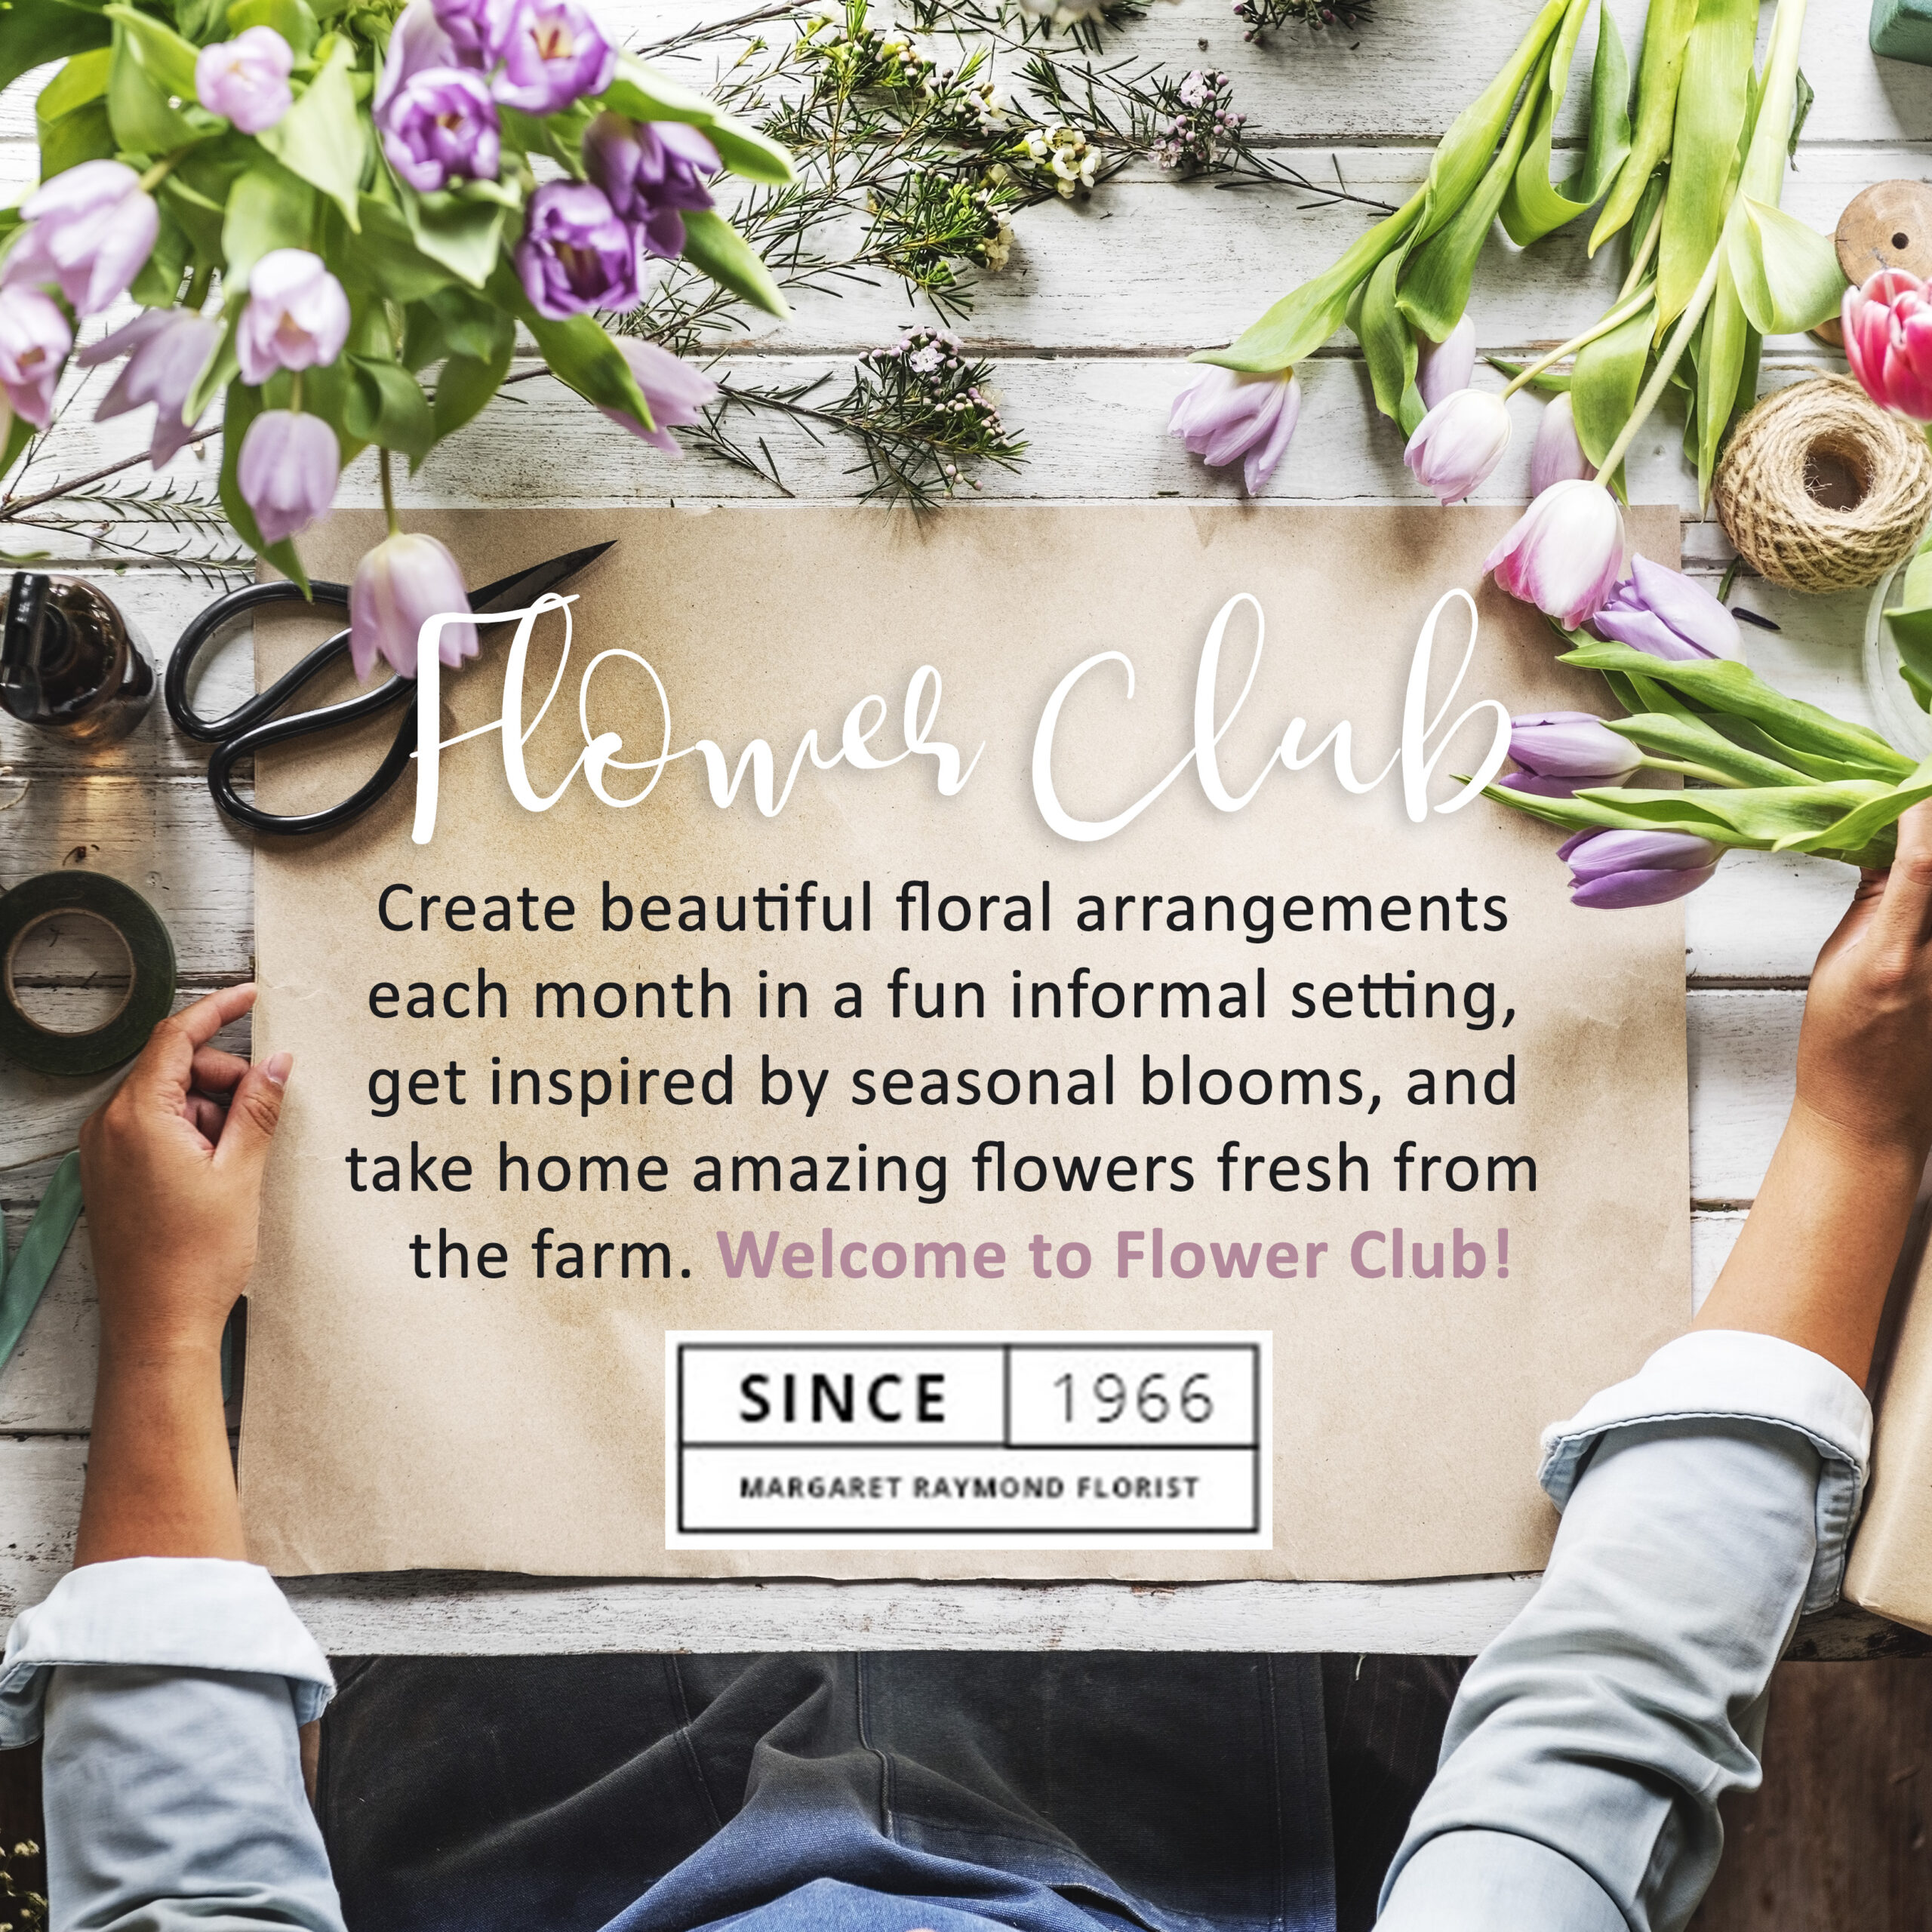 Flower club at margaret raymond florist